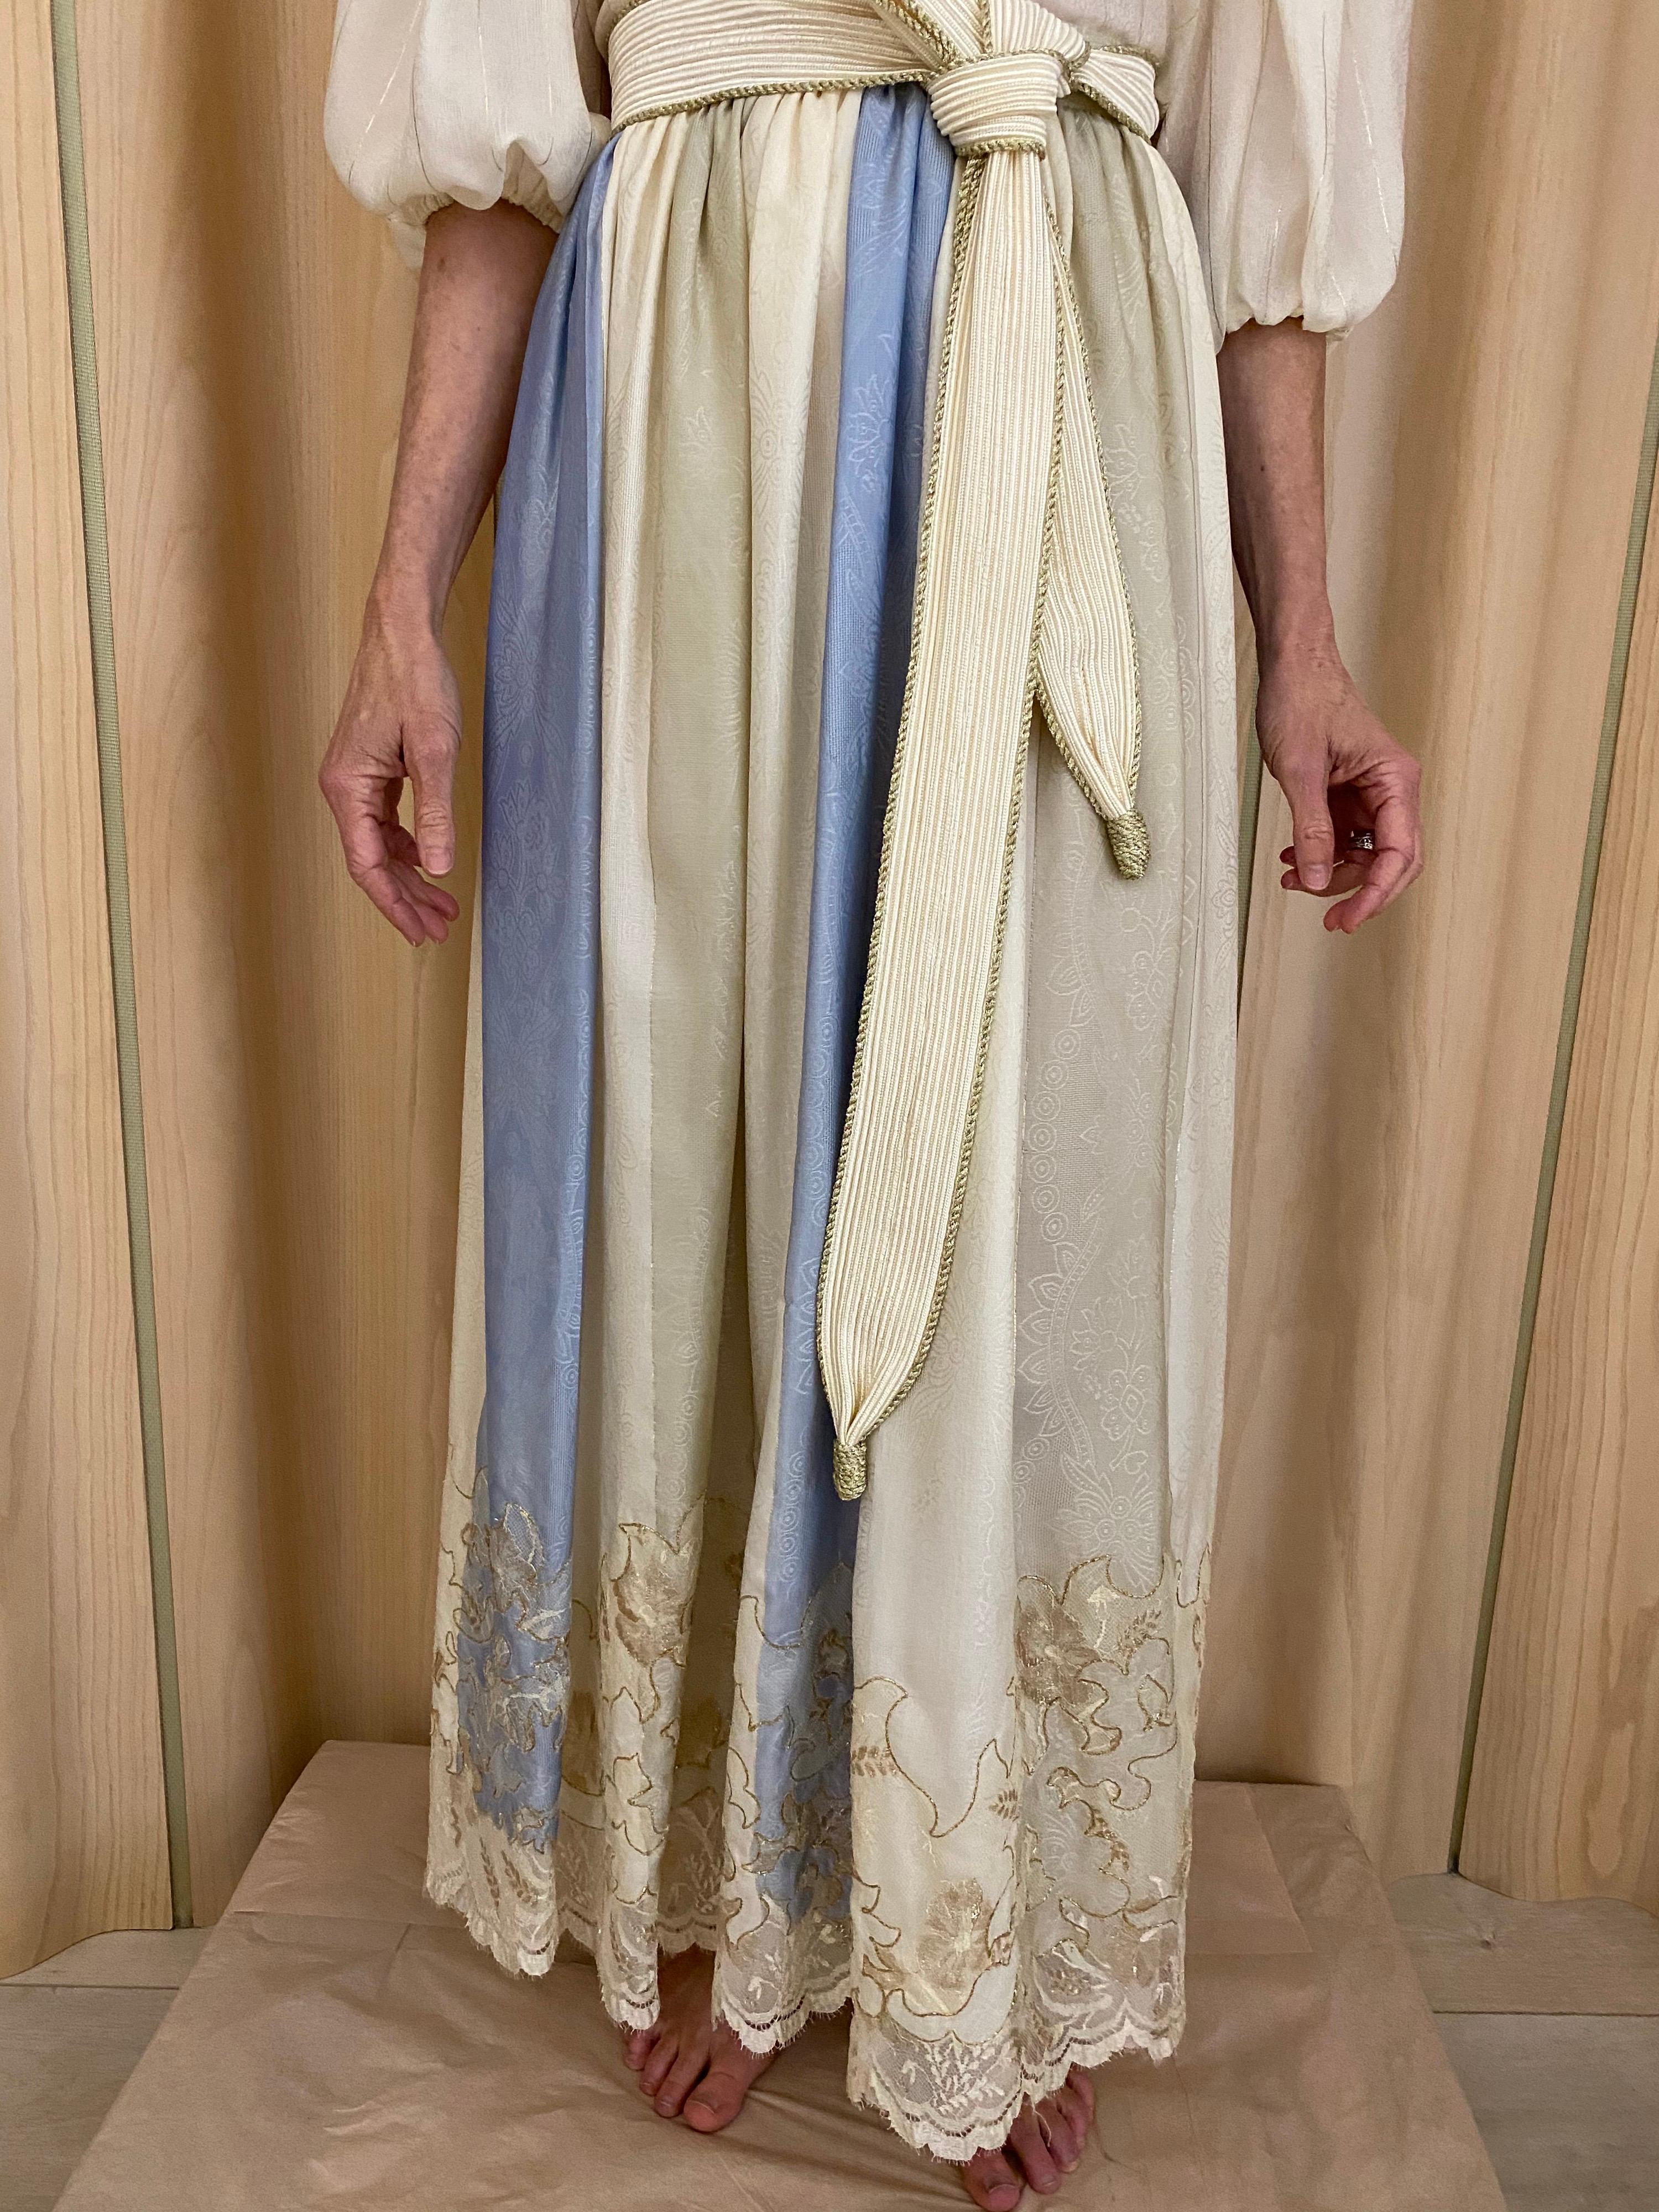 Women's Vintage Oscar De La Renta Creme and Blue Silk Blouse and Skirt Set